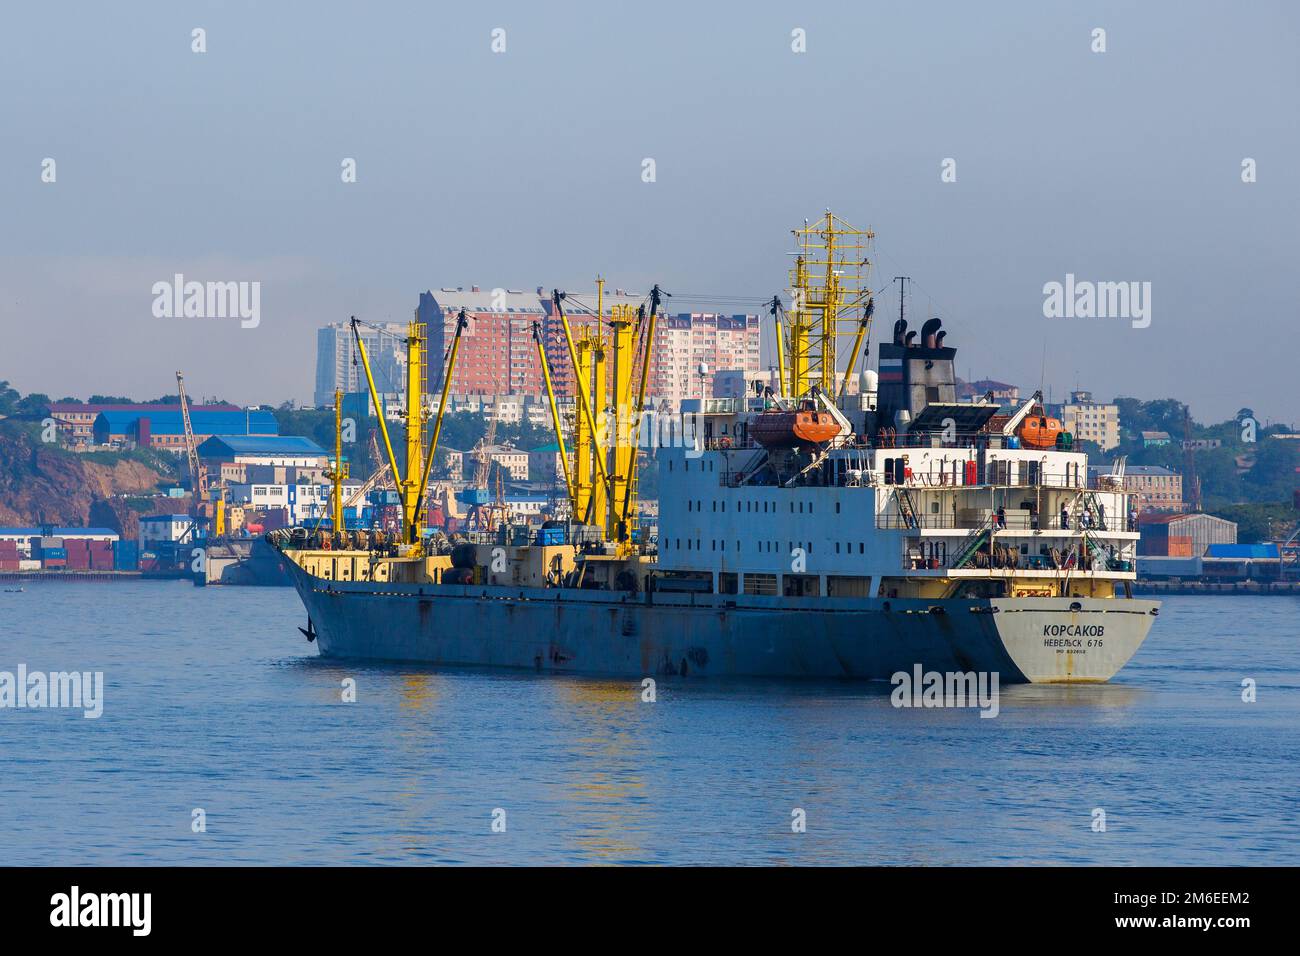 Summer, 2016 - Vladivostok, Russia - A merchant ship stands on the roadstead in the Golden Horn Bay in Vladivostok Stock Photo